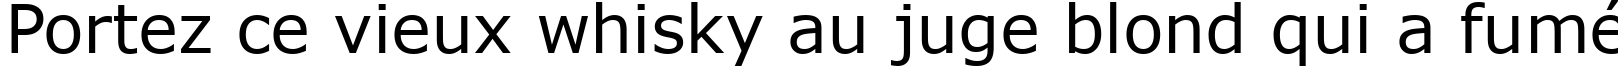 Пример написания шрифтом MS Reference Sans Serif текста на французском